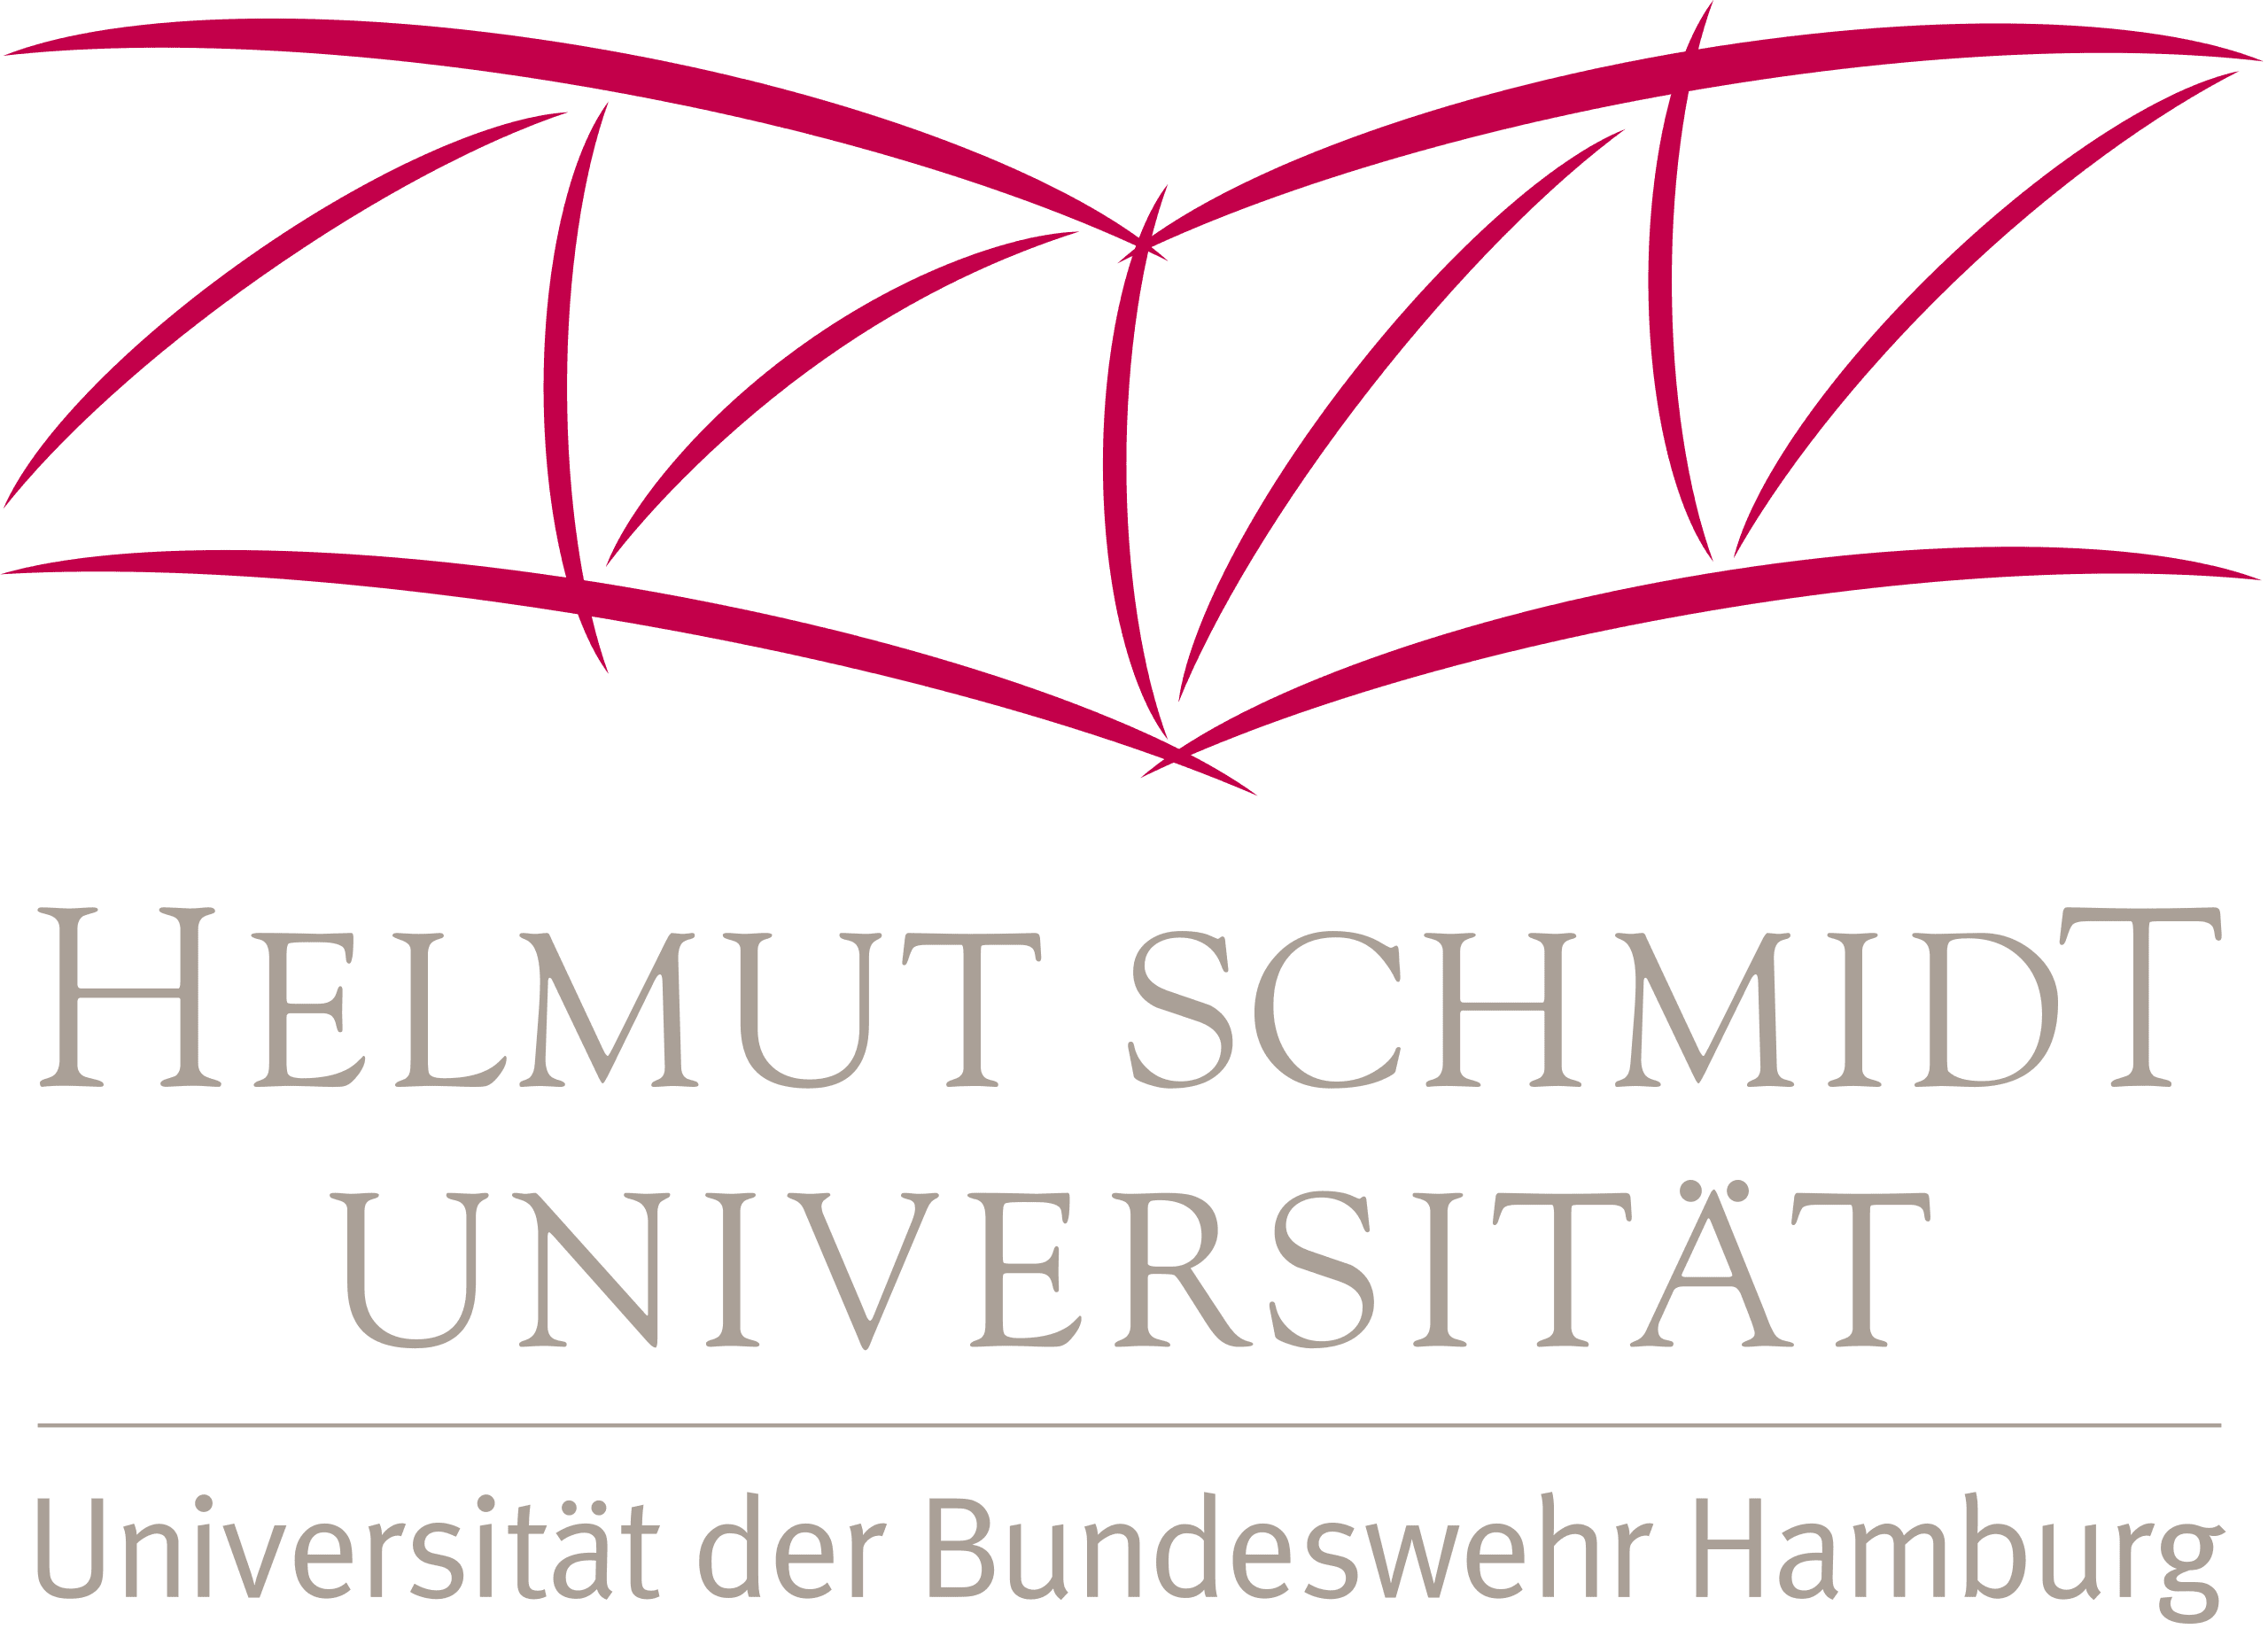 helmut-schmidt-universitatuniversitat-der-bundeswehr-hamburg-b2957142db-cover-picture